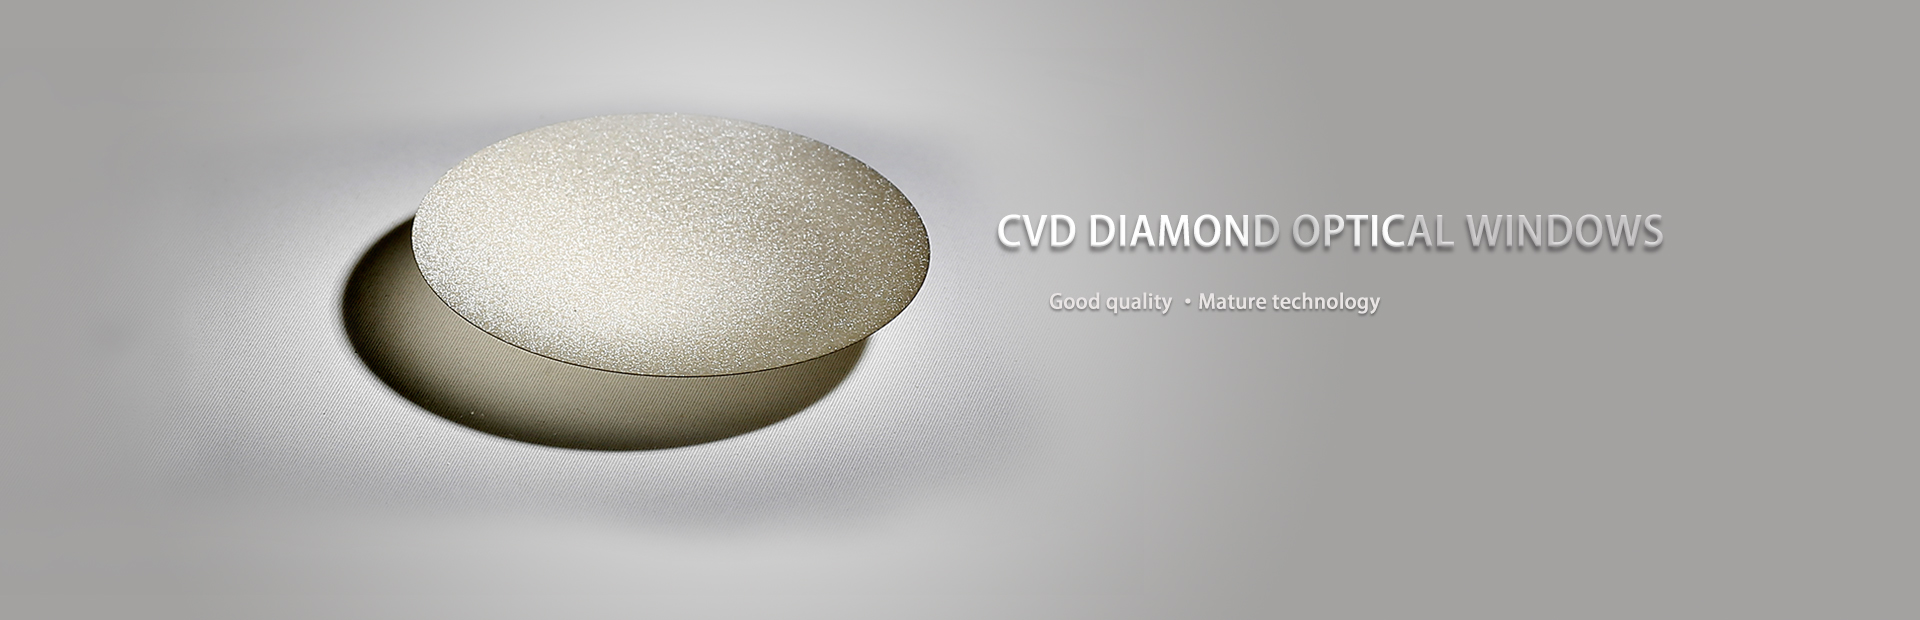 CVD diamond domes